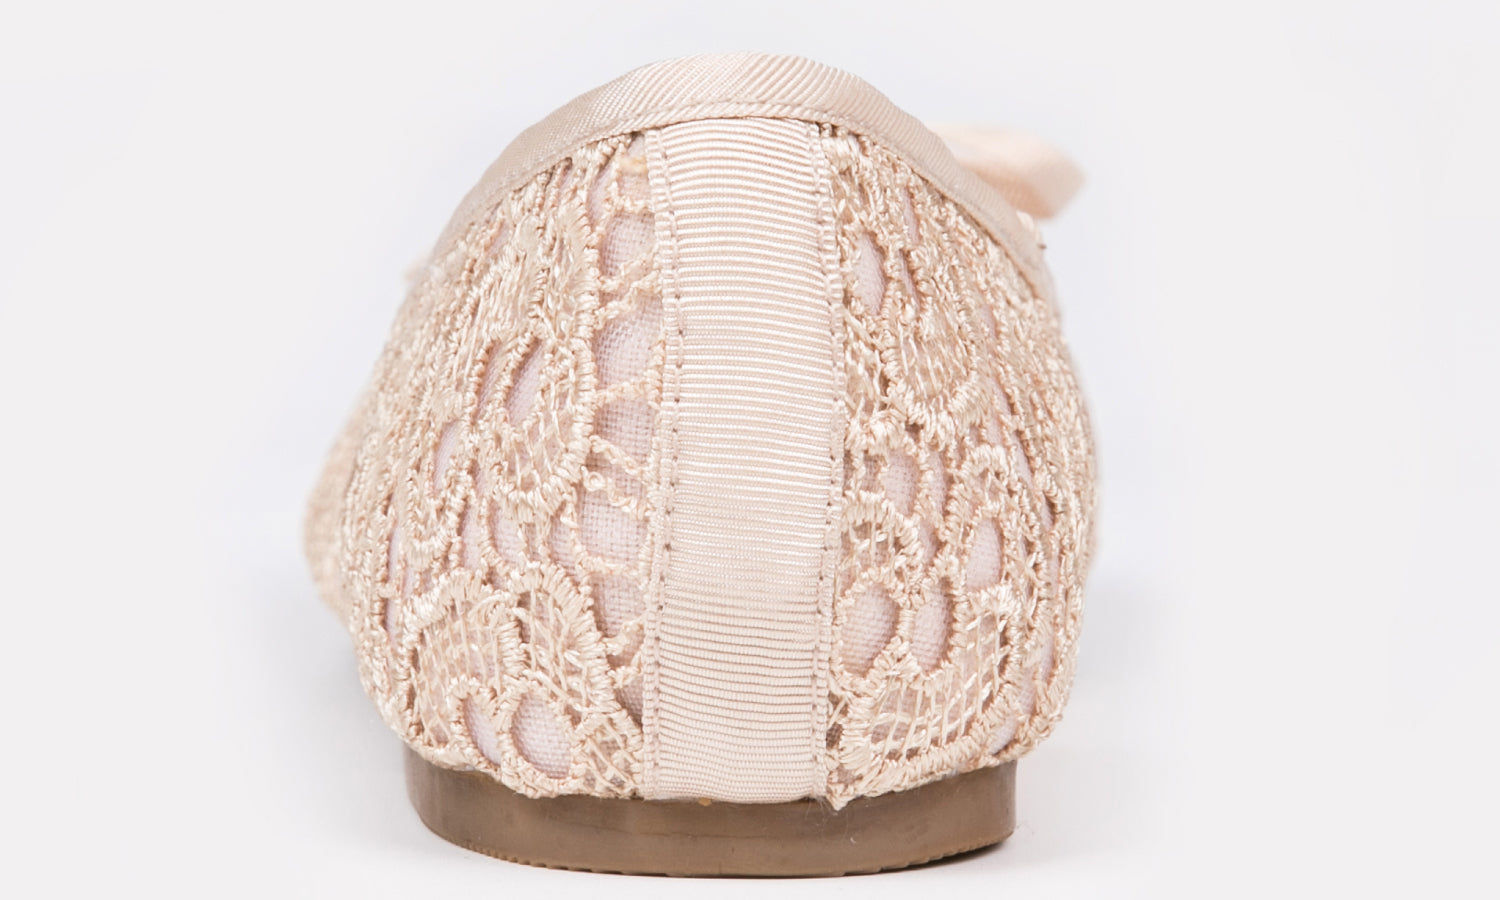 Feversole Round Toe Lace Ballet Crochet Flats Nude Women's Comfy Breathable Shoes